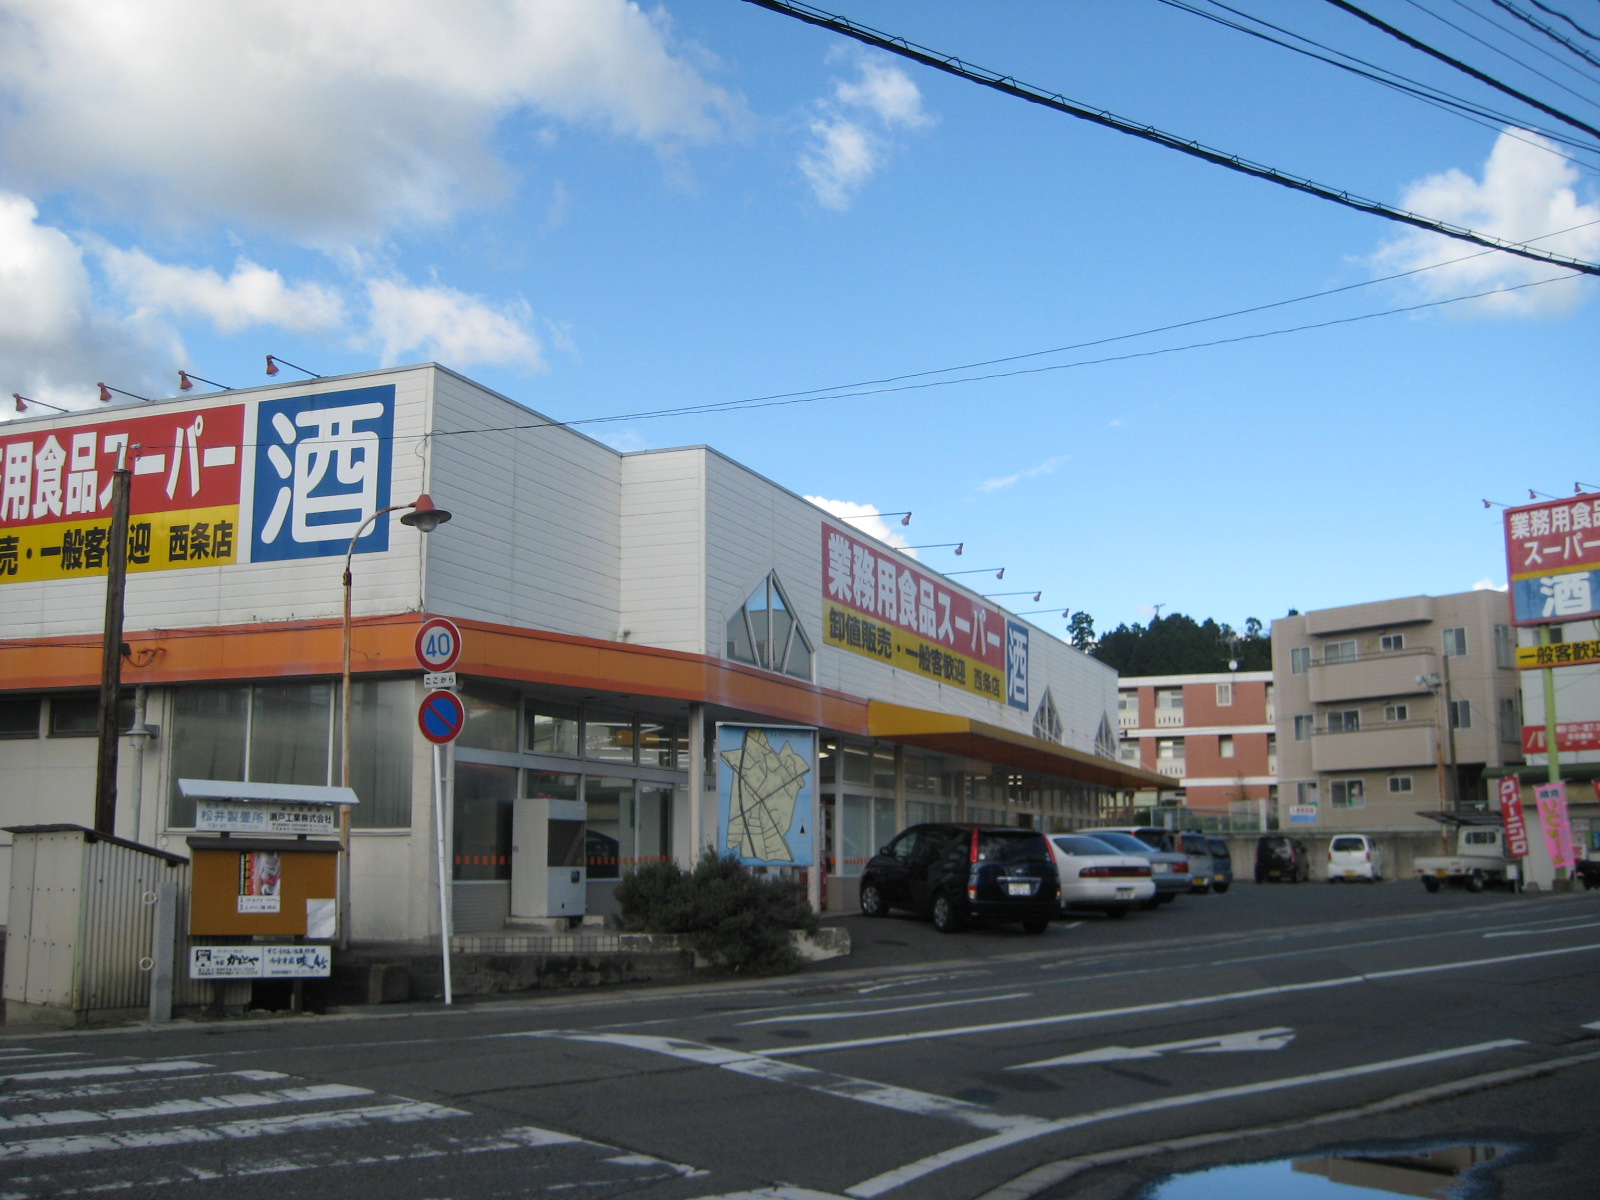 Supermarket. 341m up business for Super Saijo store (Super)